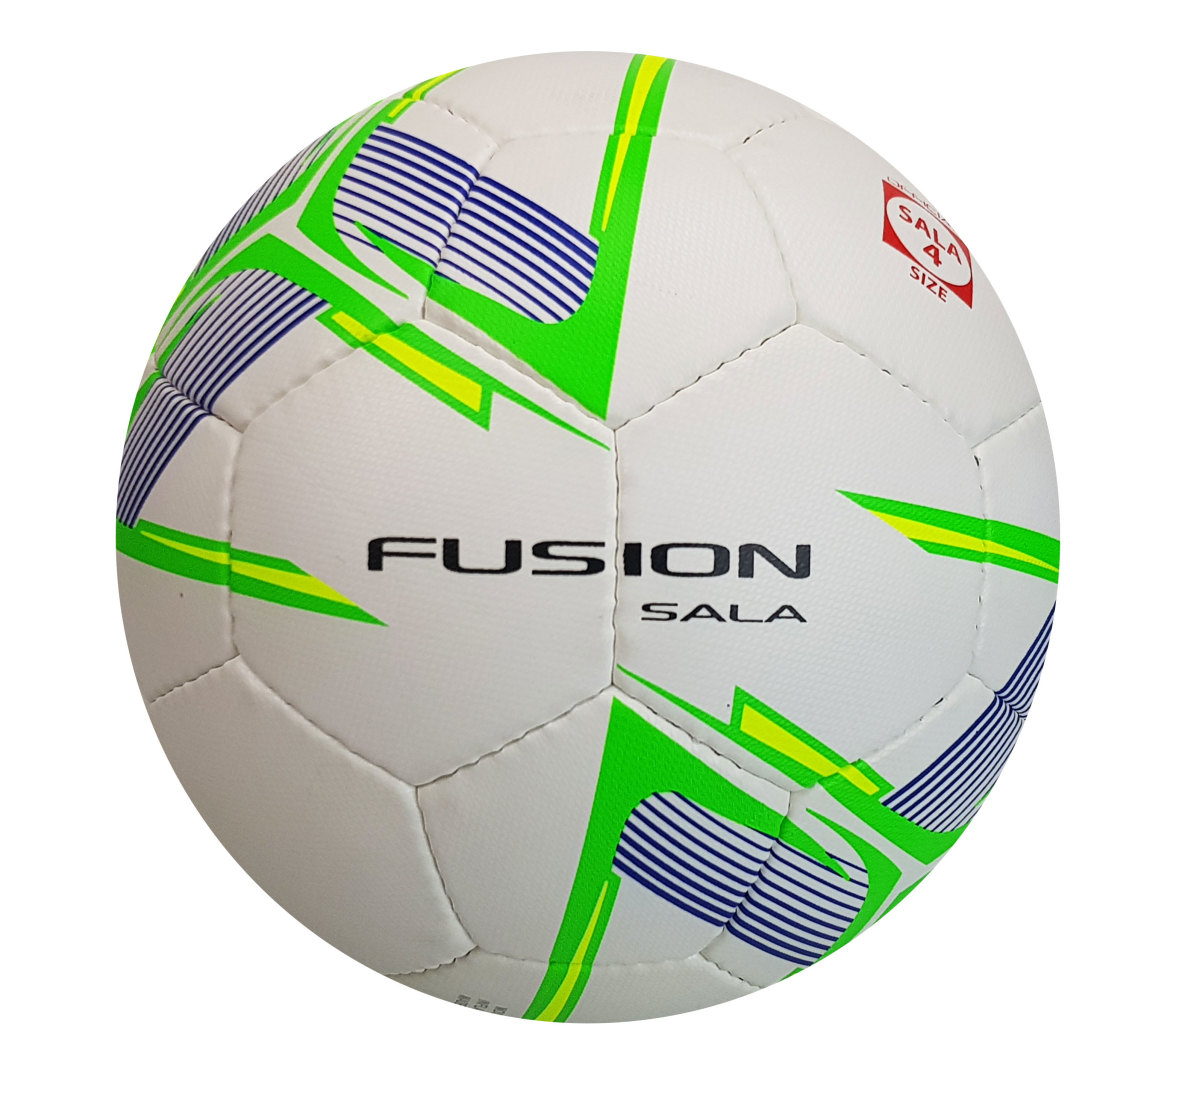 Precision Fusion Sala Futsal